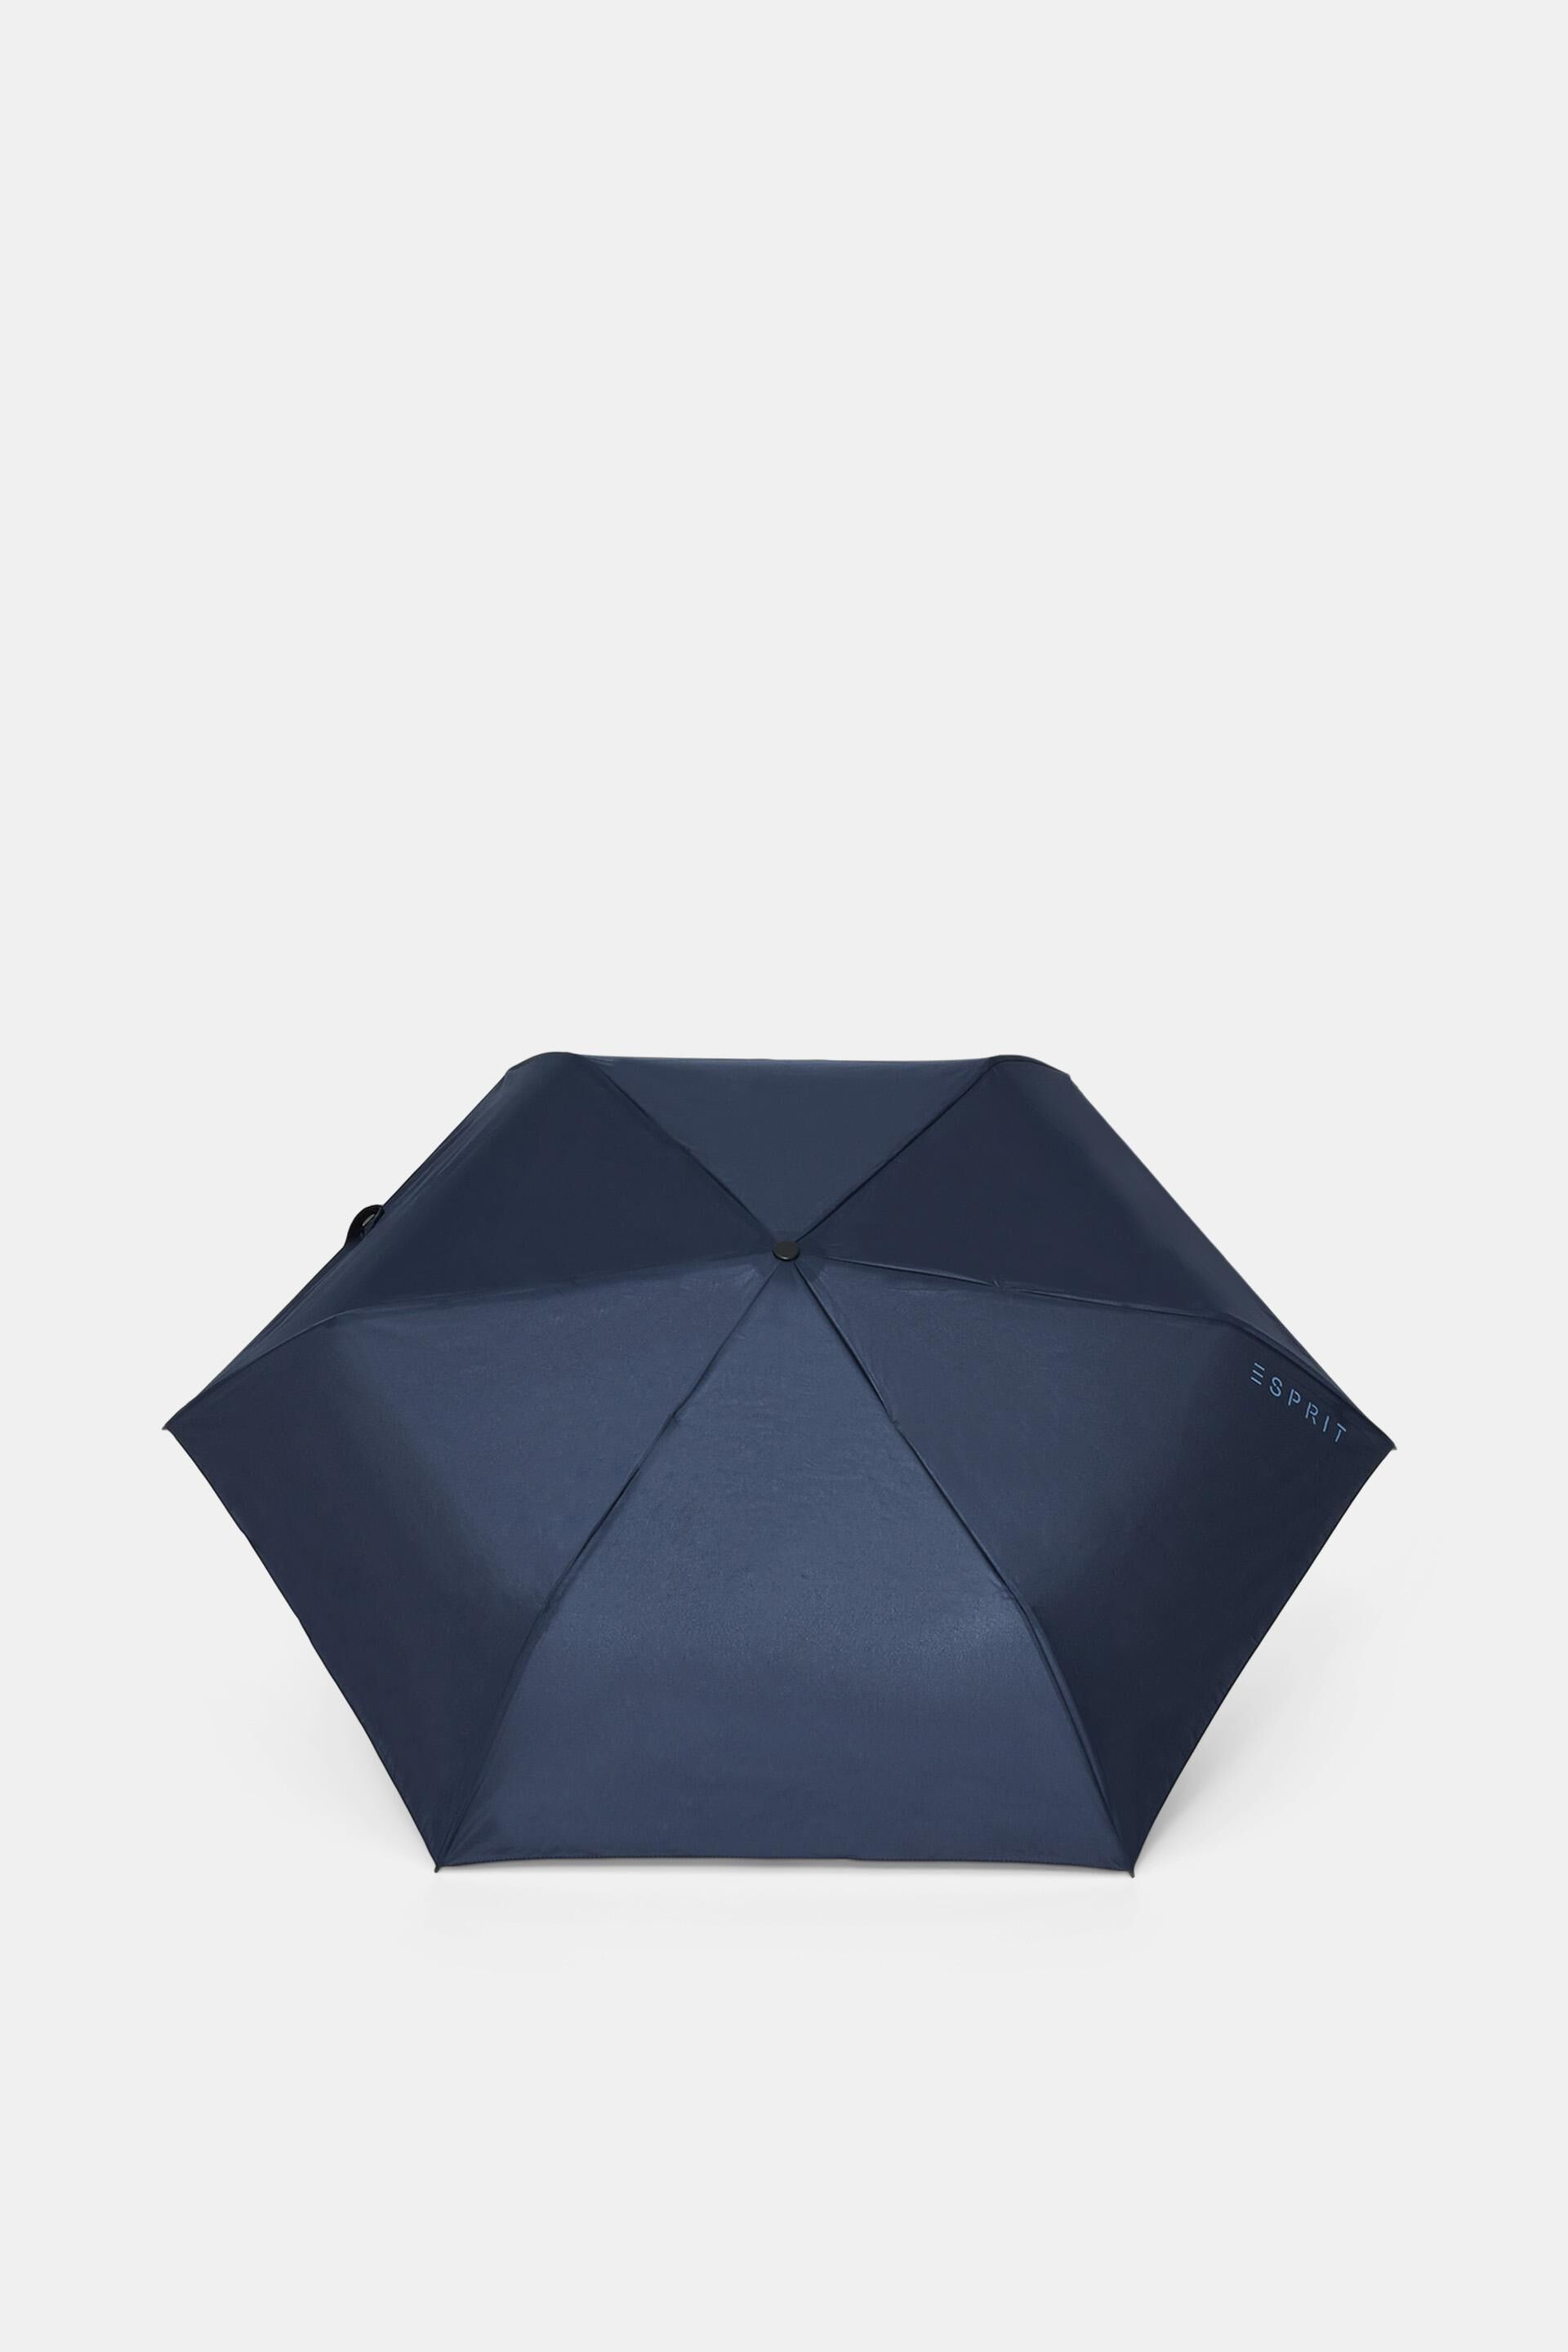 Esprit Online Store Easymatic slimline pocket umbrella blue in